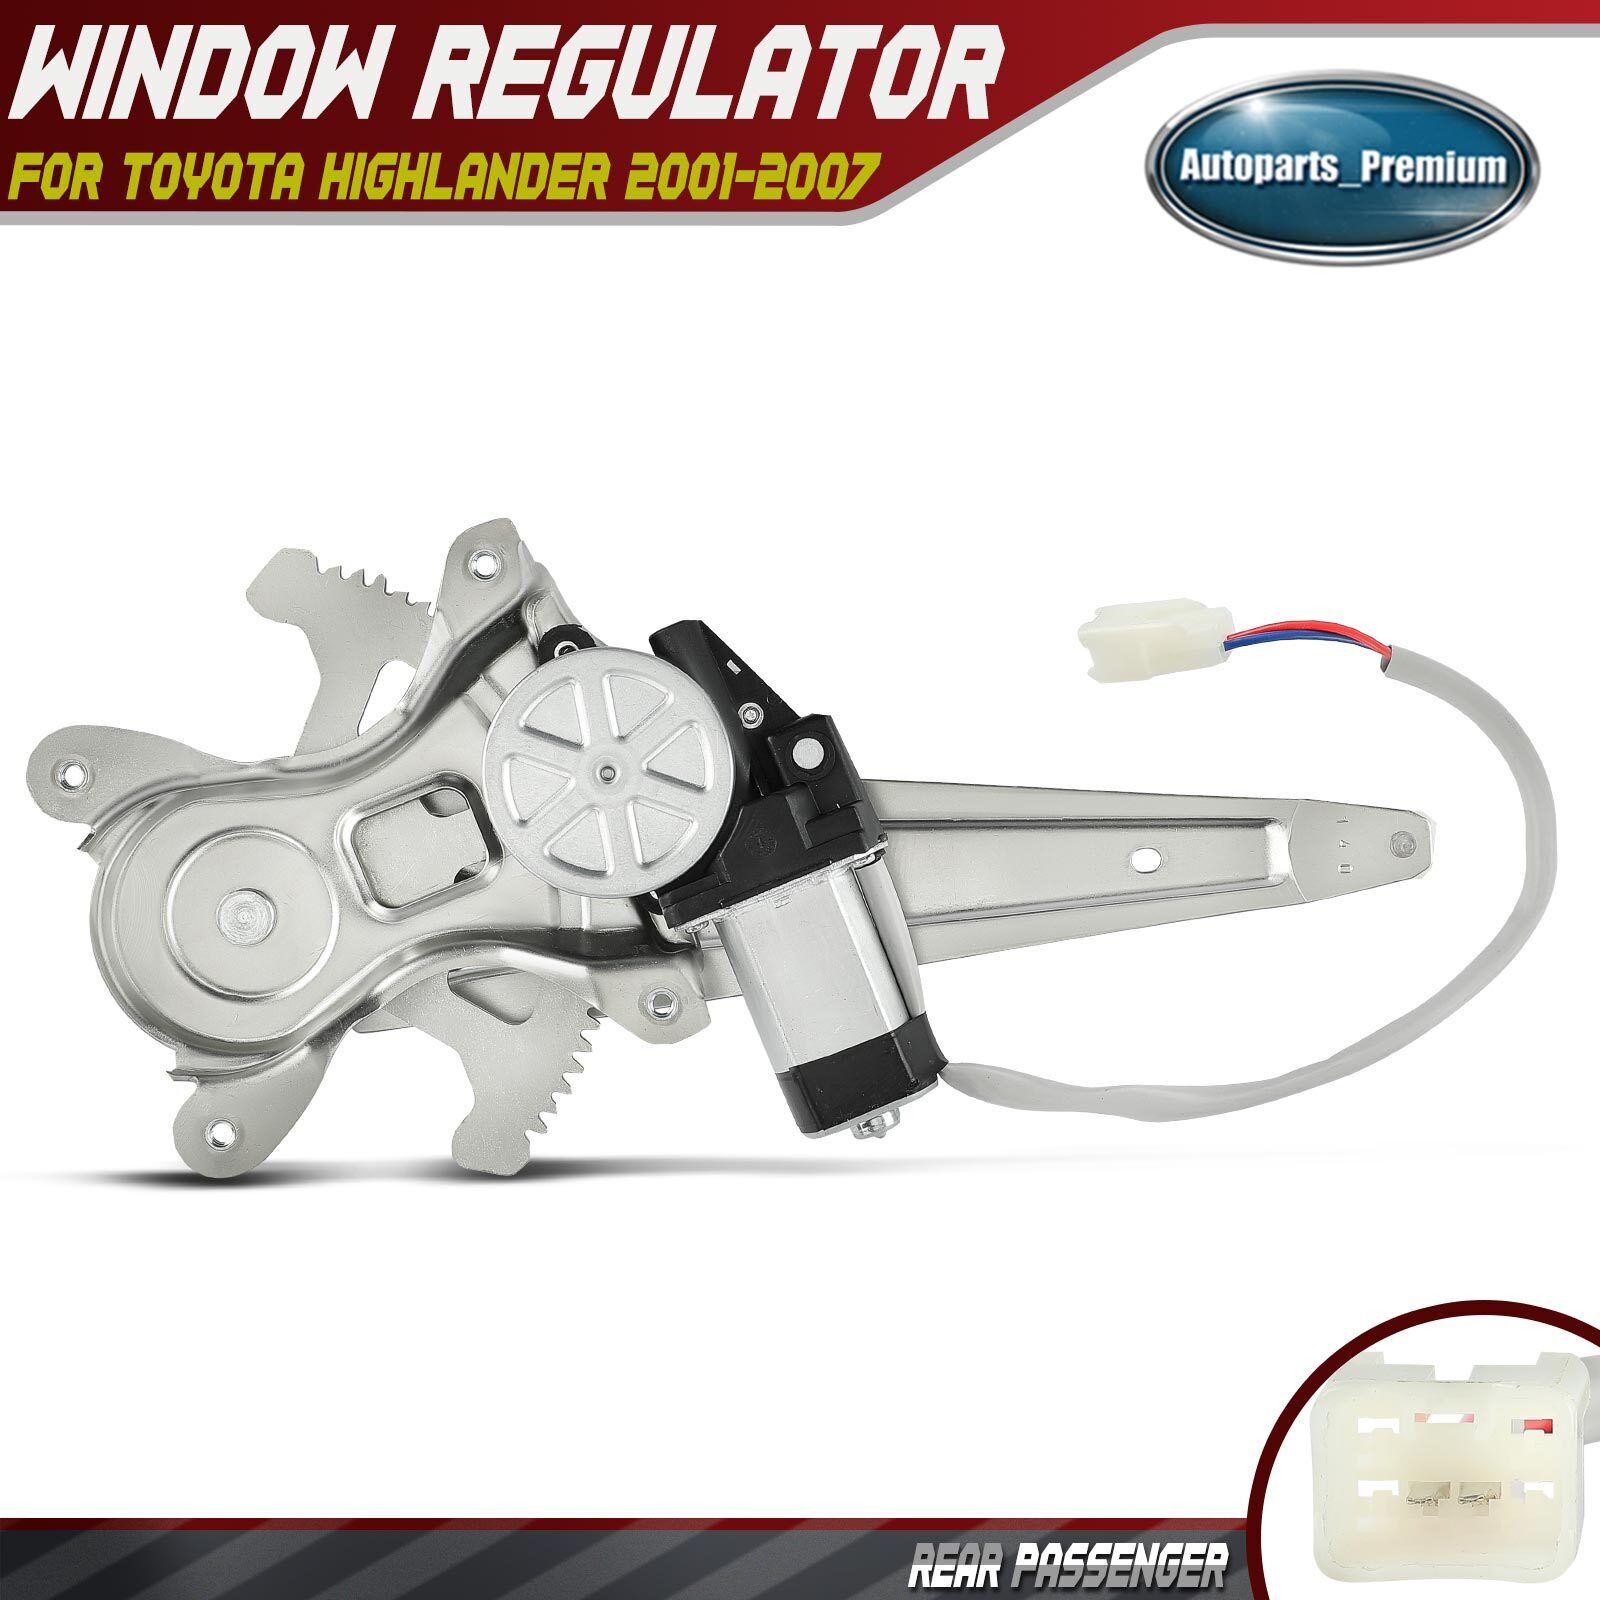 Rear Passenger Power Window Regulator w/ 2-Pin Motor for Toyota Highlander 01-07